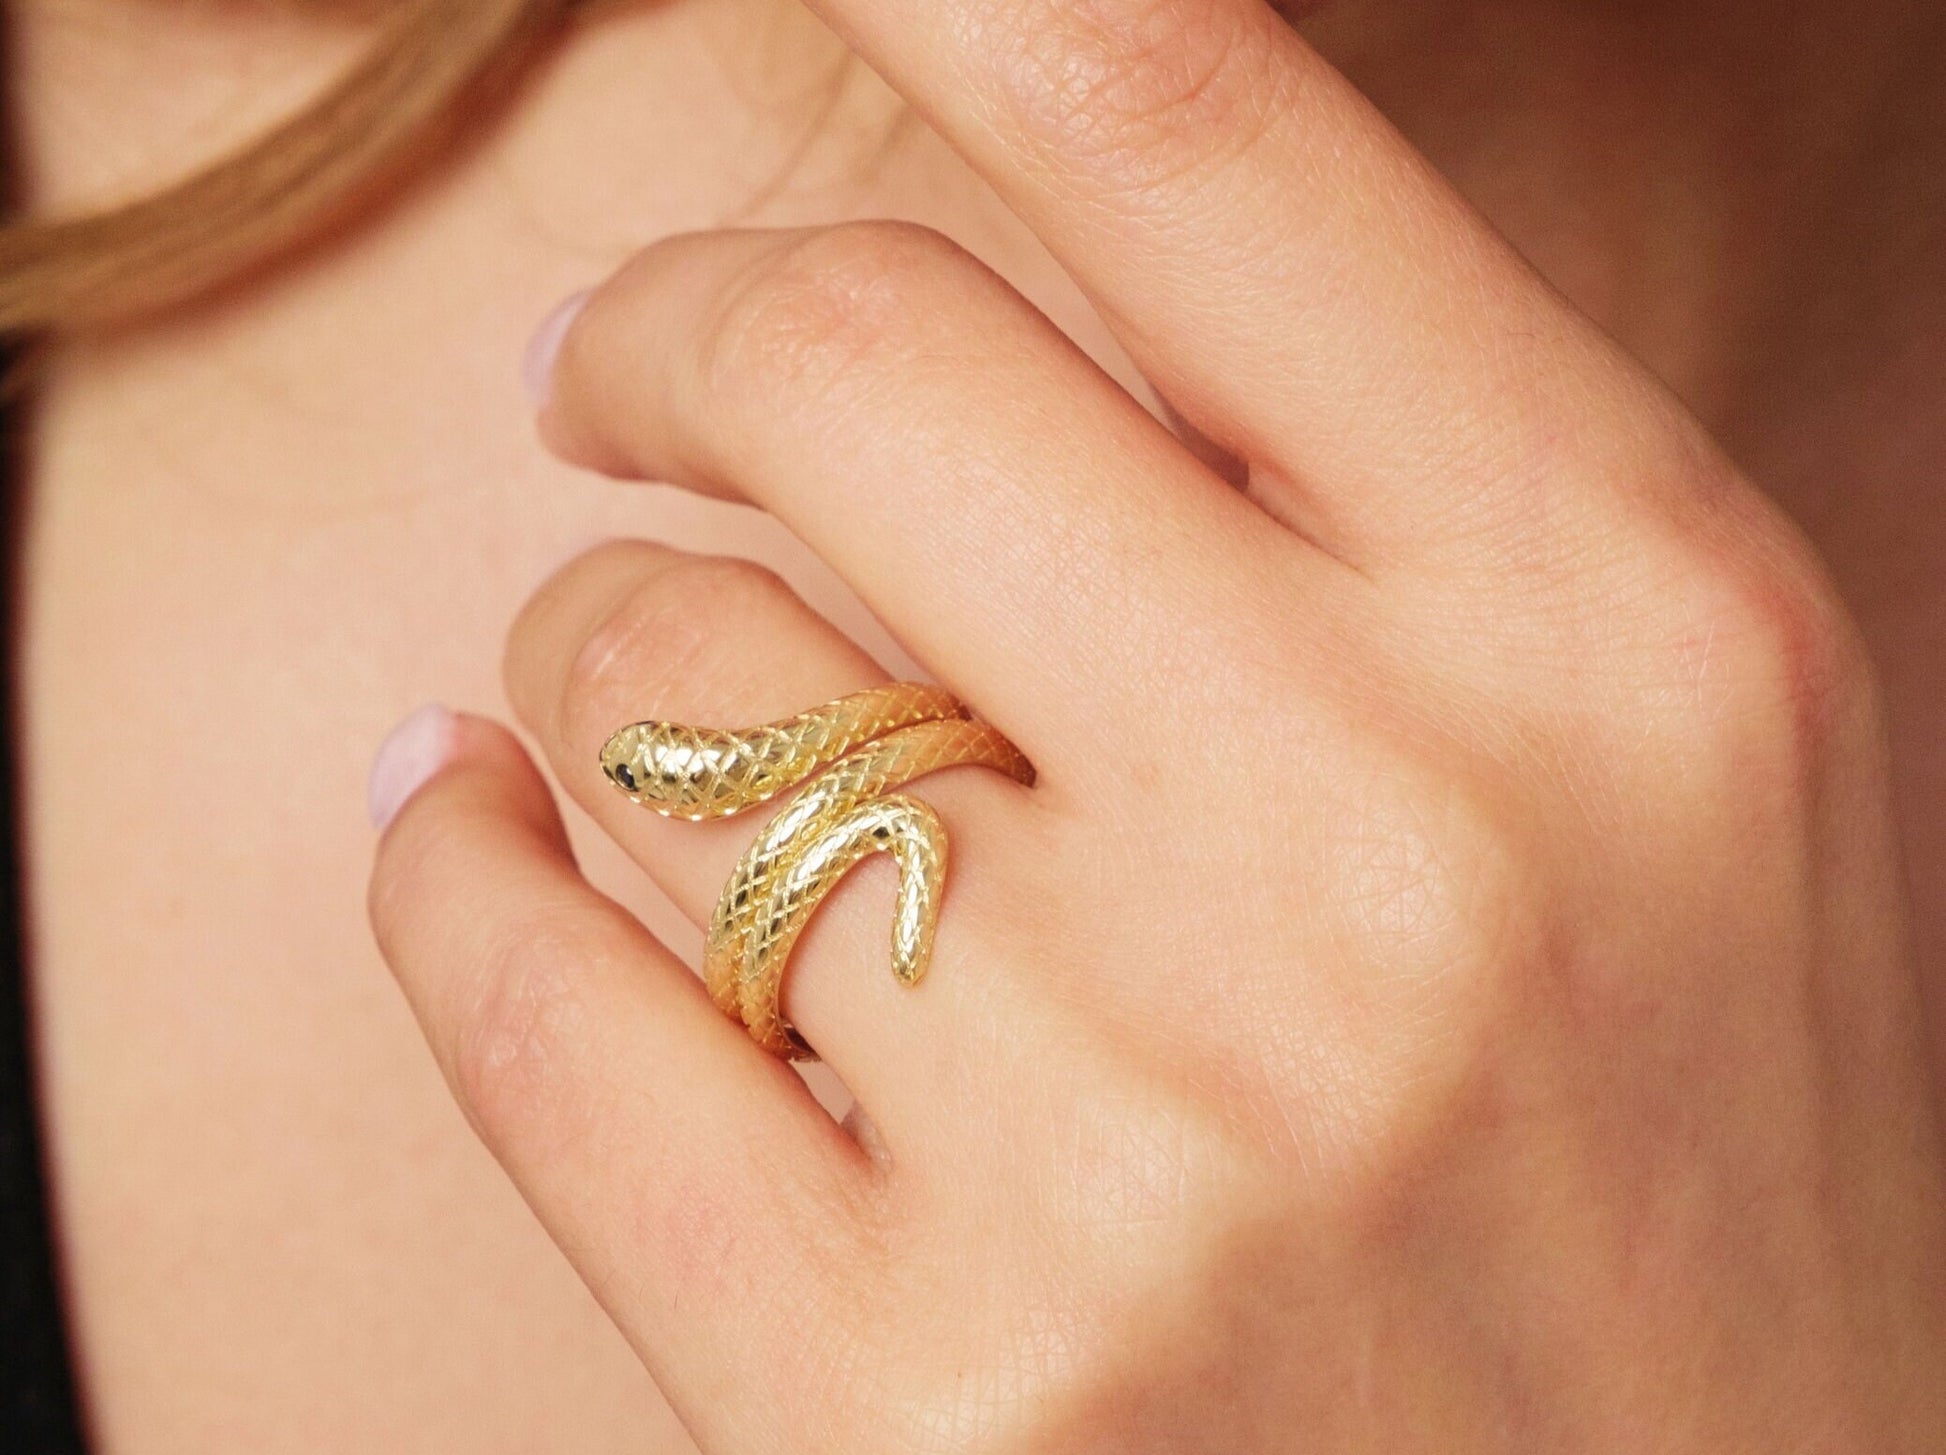 14k Gold Snake Ring, Snake Ring with Emerald Eyes, Statement Ring, Animal Ring, Dainty Serpent Ring, Wrap Around Snake Ring, Gift For Her